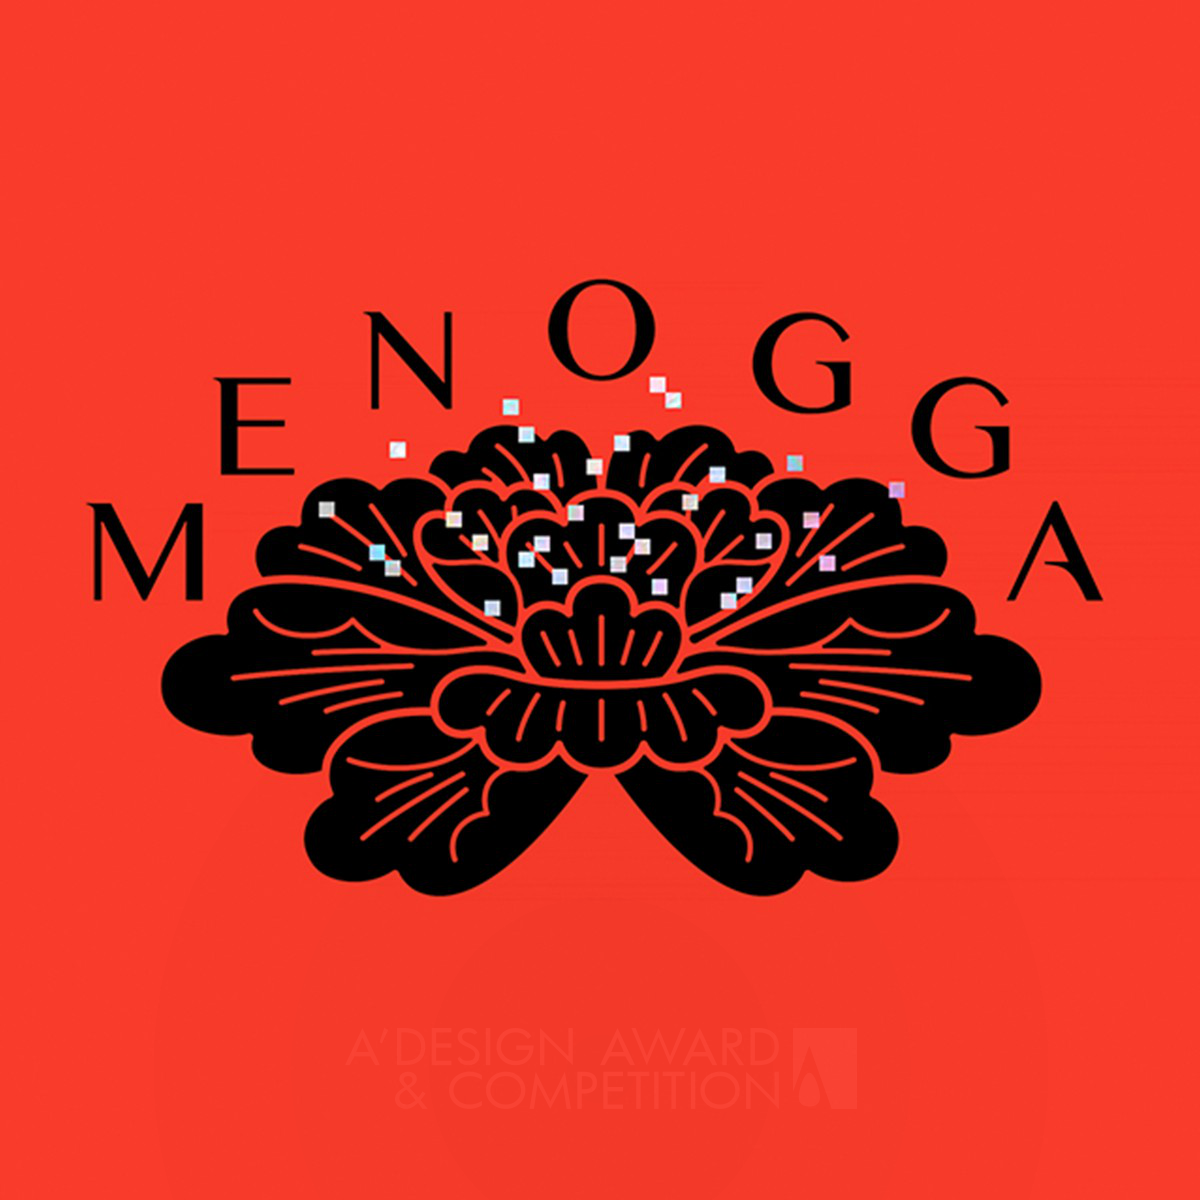 Menogga Branding Design by 1983ASIA